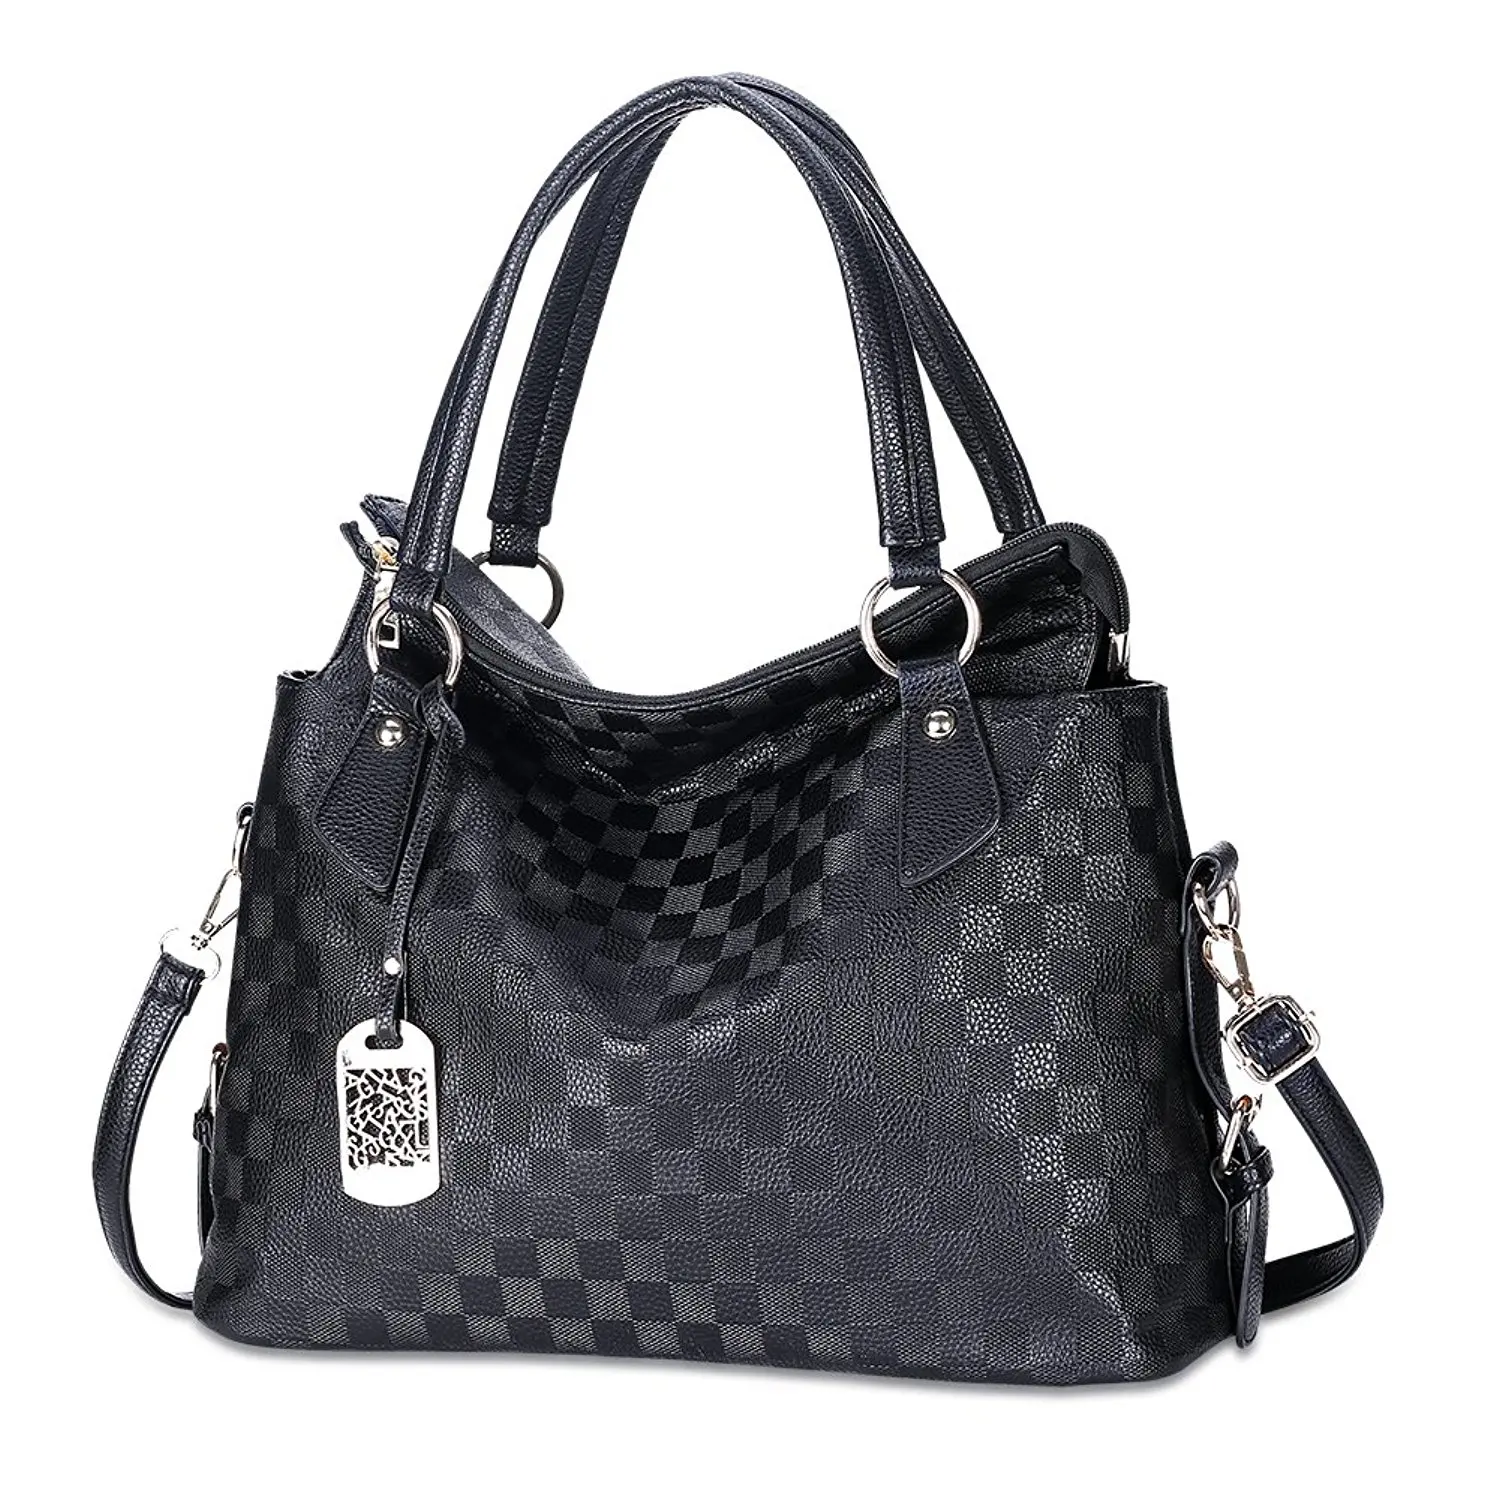 Cheap Large Black Tote Handbags, find Large Black Tote Handbags deals